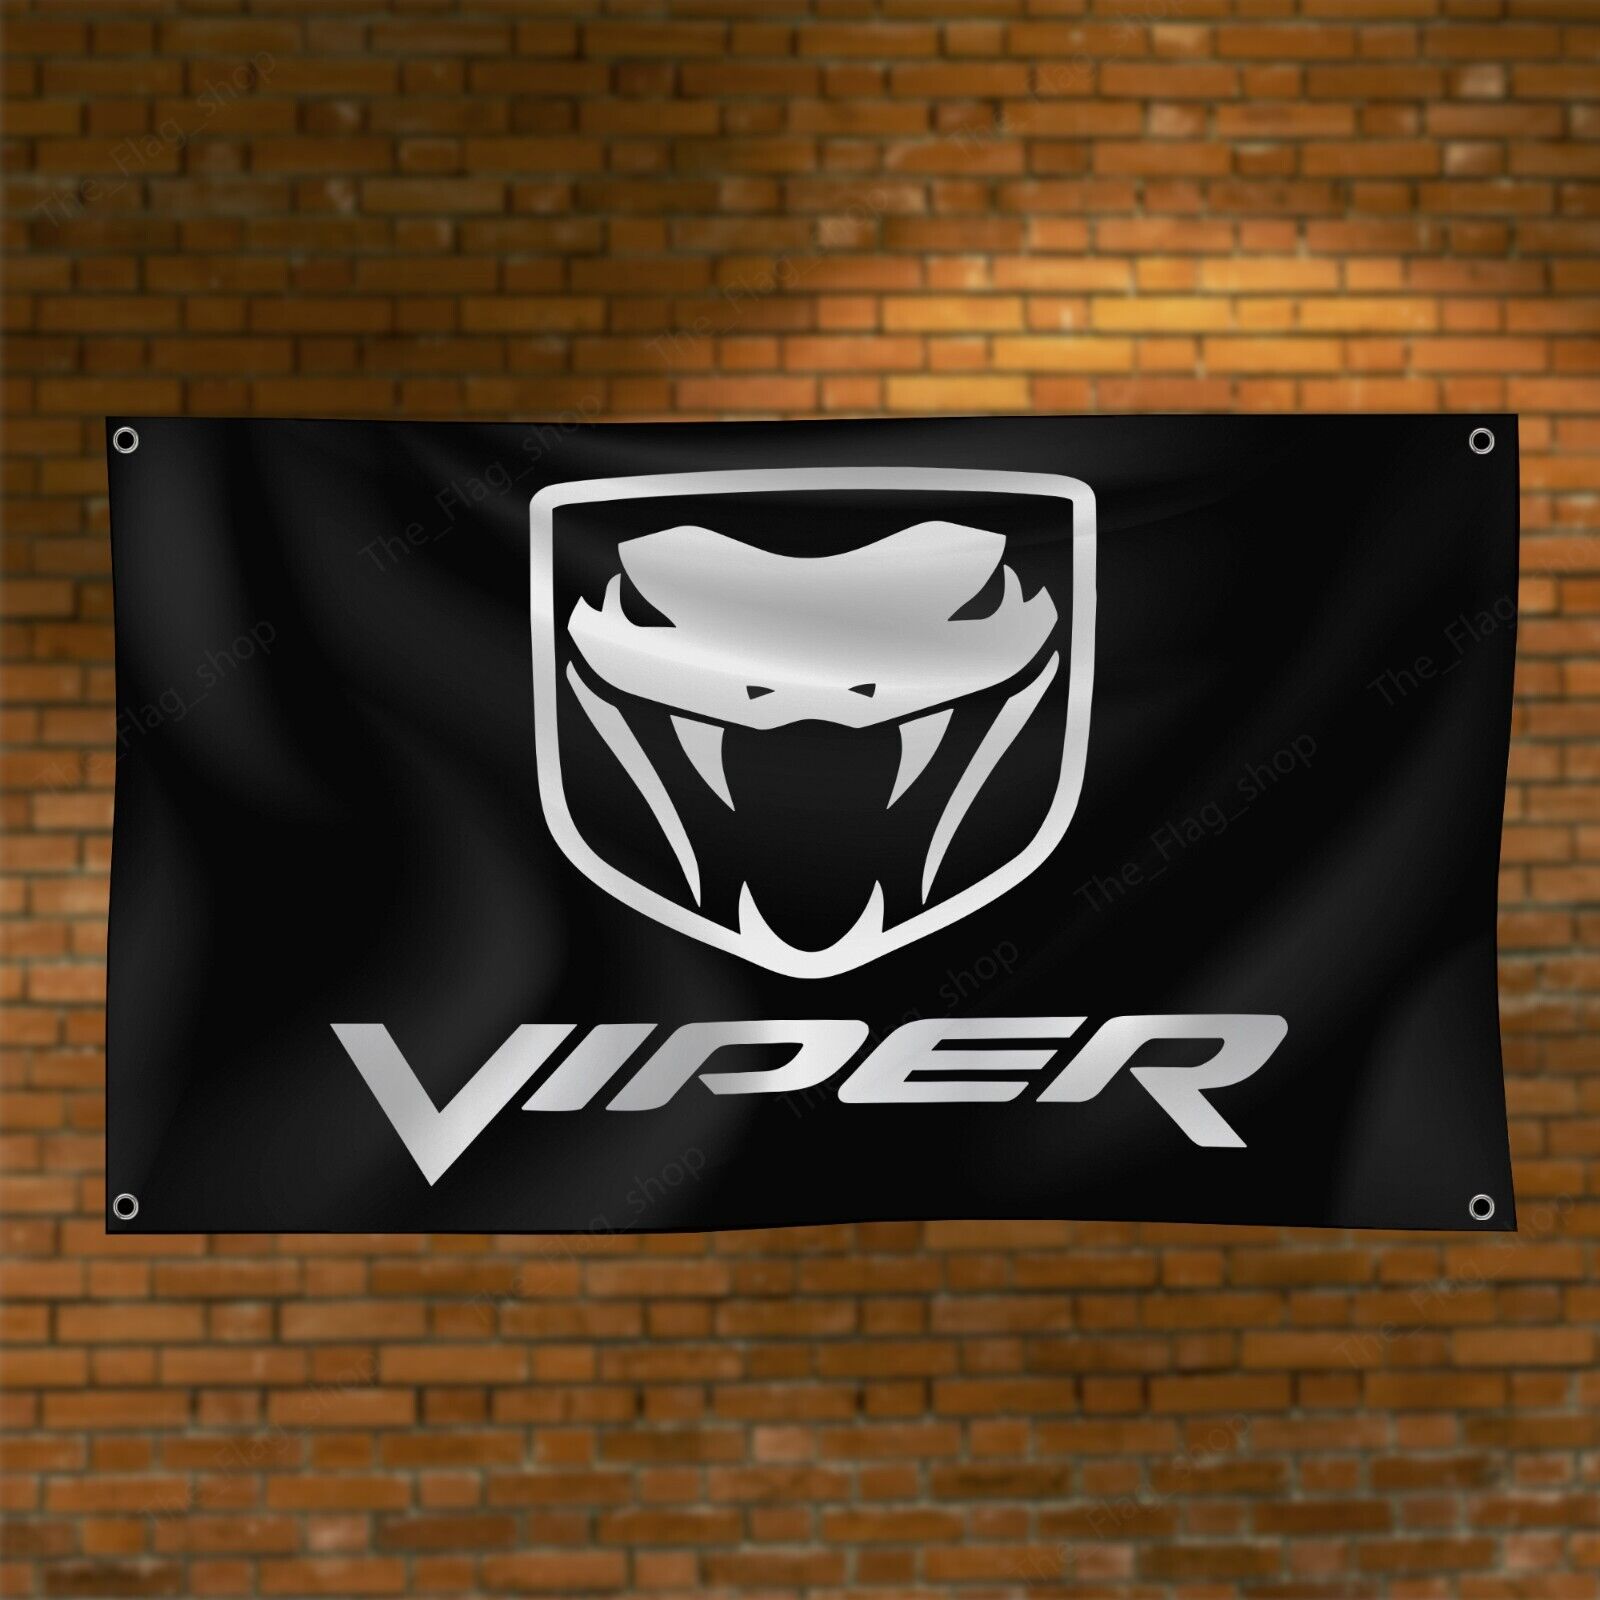 Dodge Viper Banner 3x5 ft Flags SRT Car Show Garage Man Cave Wall Decor Sign